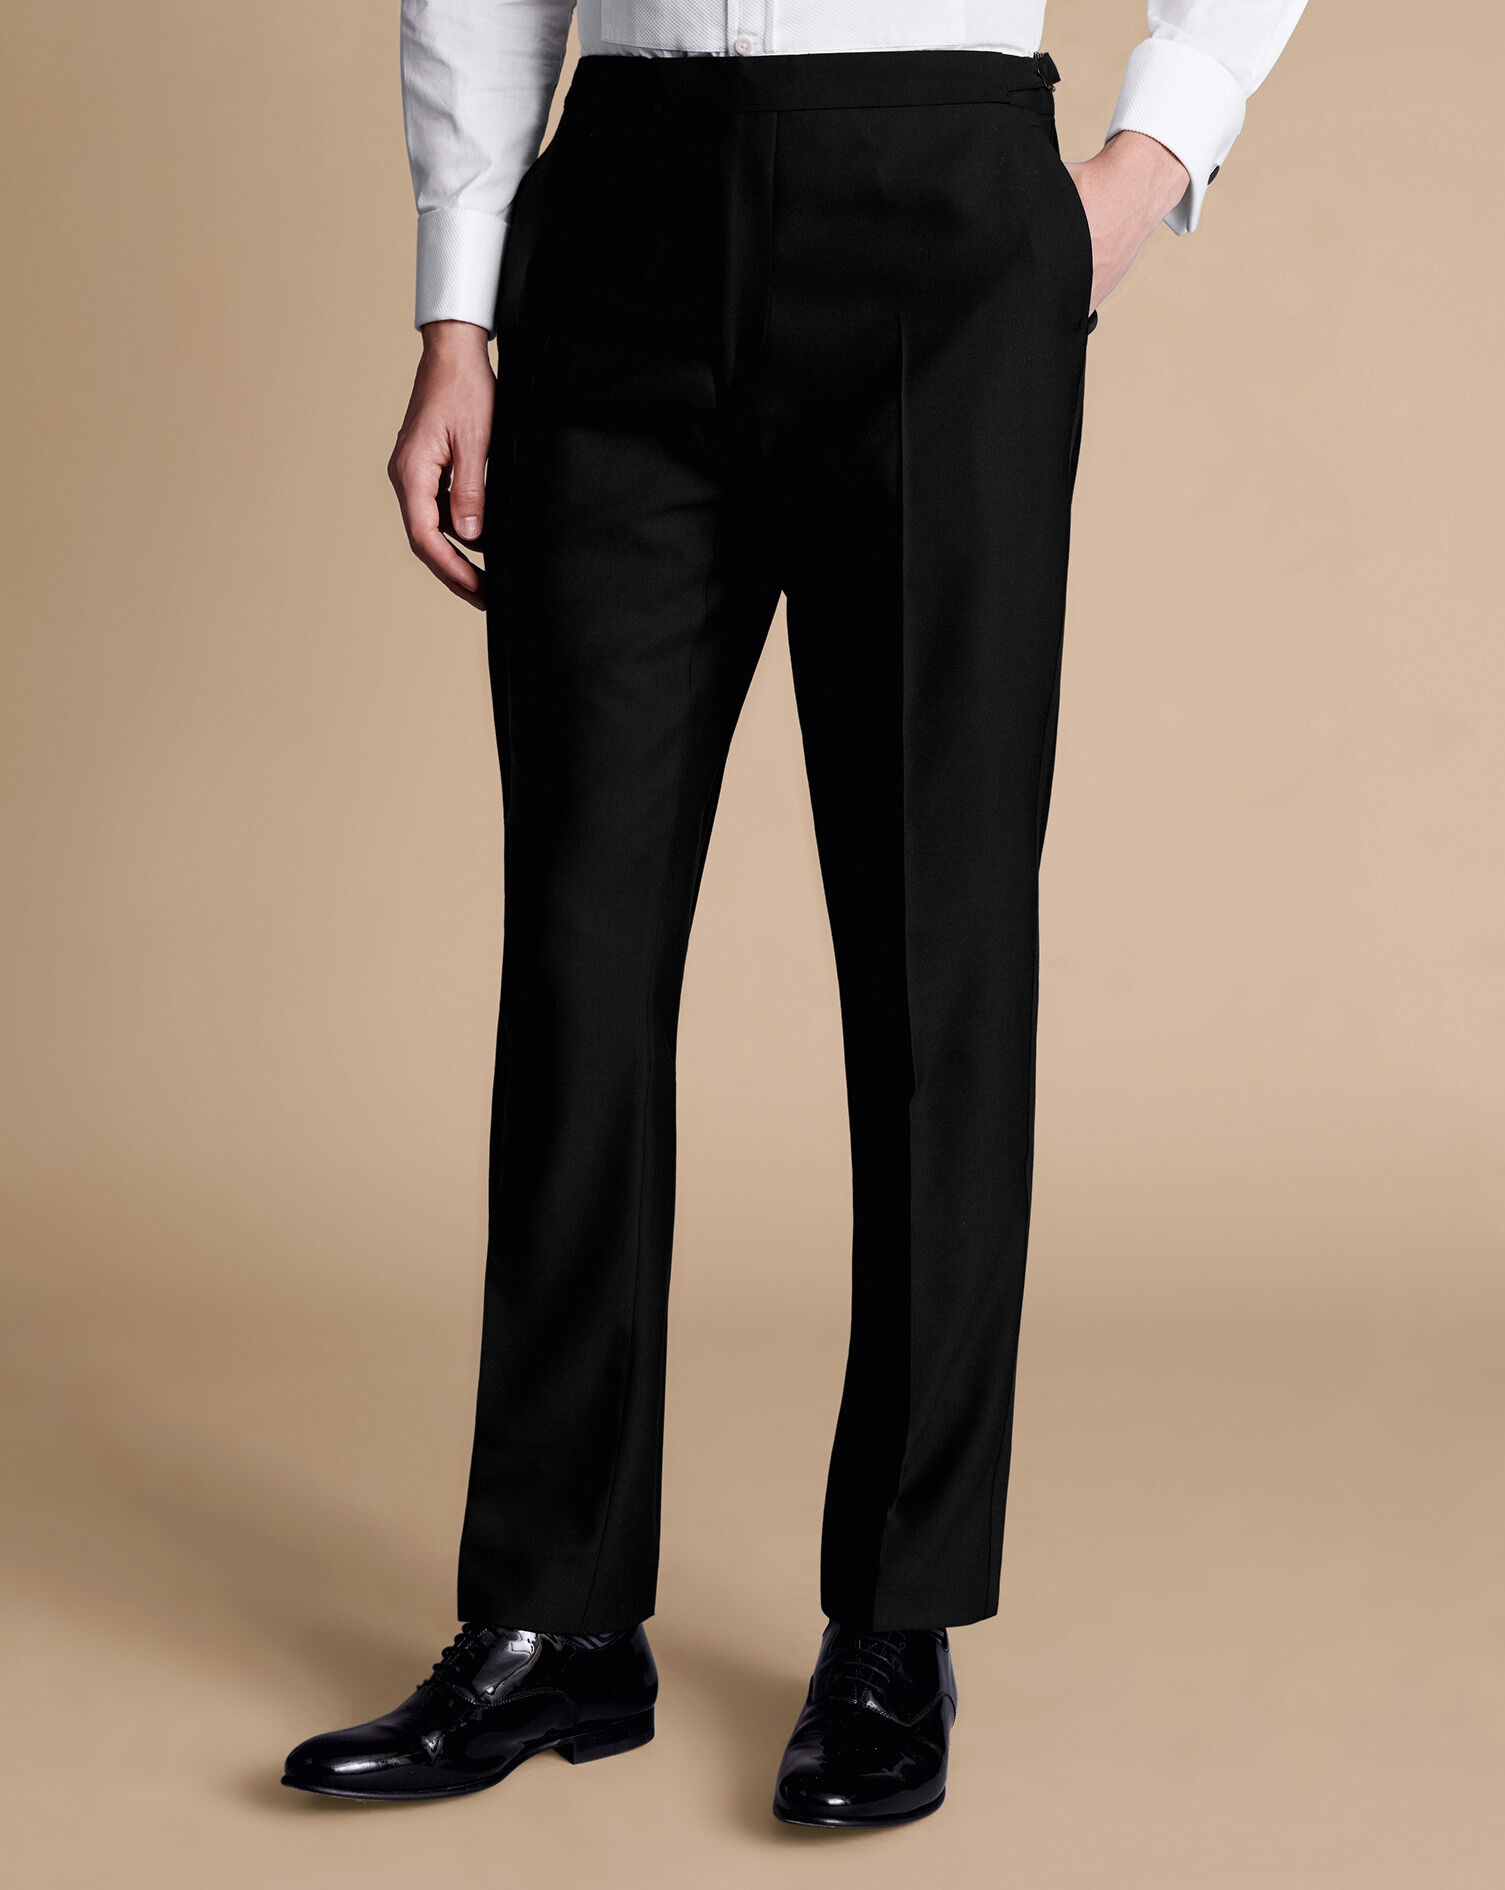 Men's Dinner Jackets - Tuxedos & Black Tie Jackets | SUITSUPPLY US